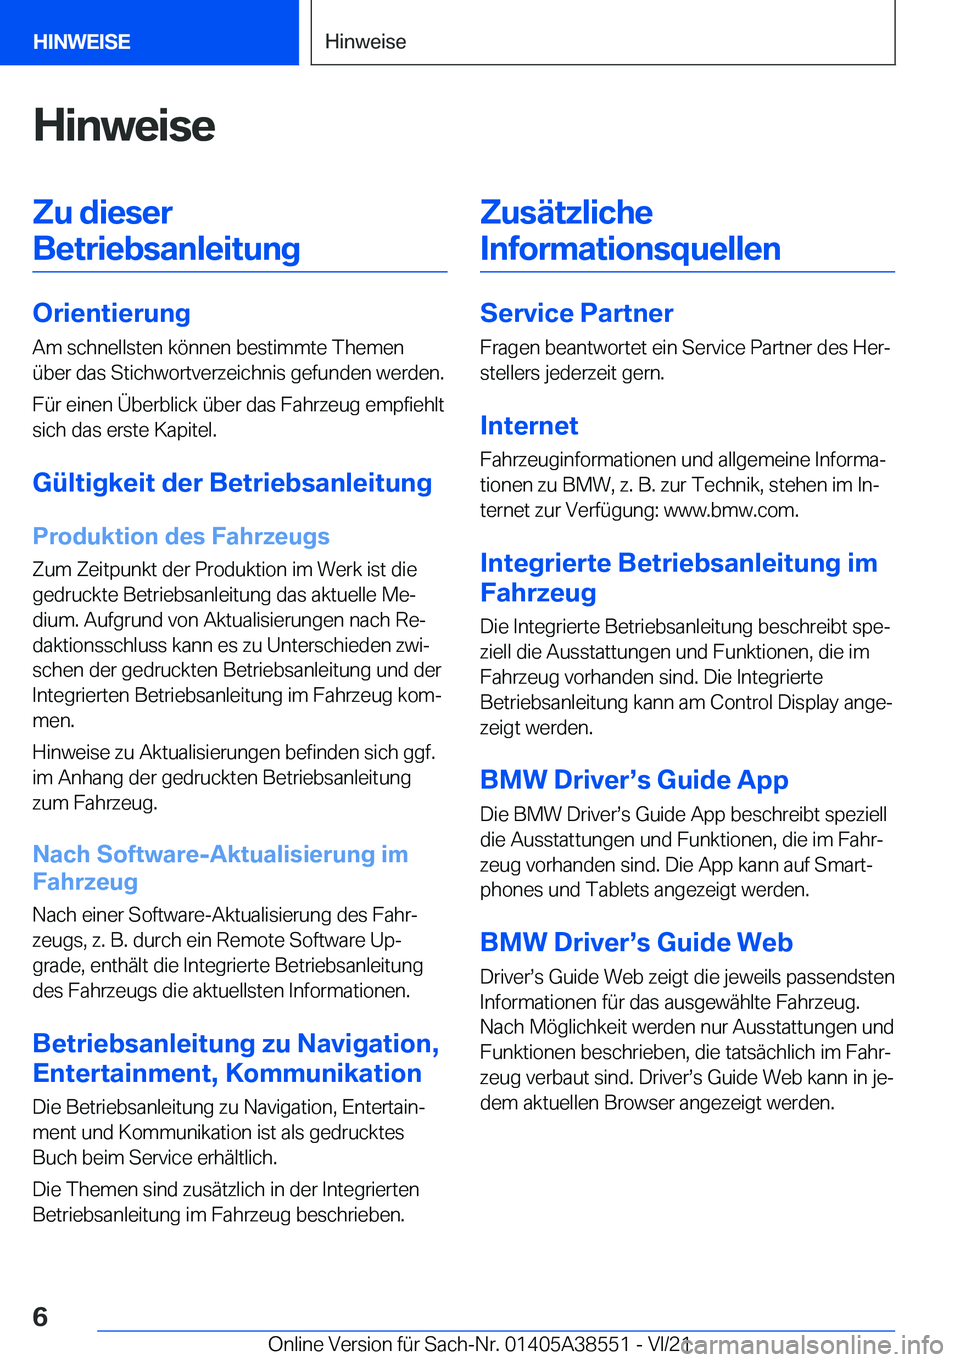 BMW X6 2022  Betriebsanleitungen (in German) �H�i�n�w�e�i�s�e�Z�u��d�i�e�s�e�r�B�e�t�r�i�e�b�s�a�n�l�e�i�t�u�n�g
�O�r�i�e�n�t�i�e�r�u�n�g �A�m��s�c�h�n�e�l�l�s�t�e�n��k�